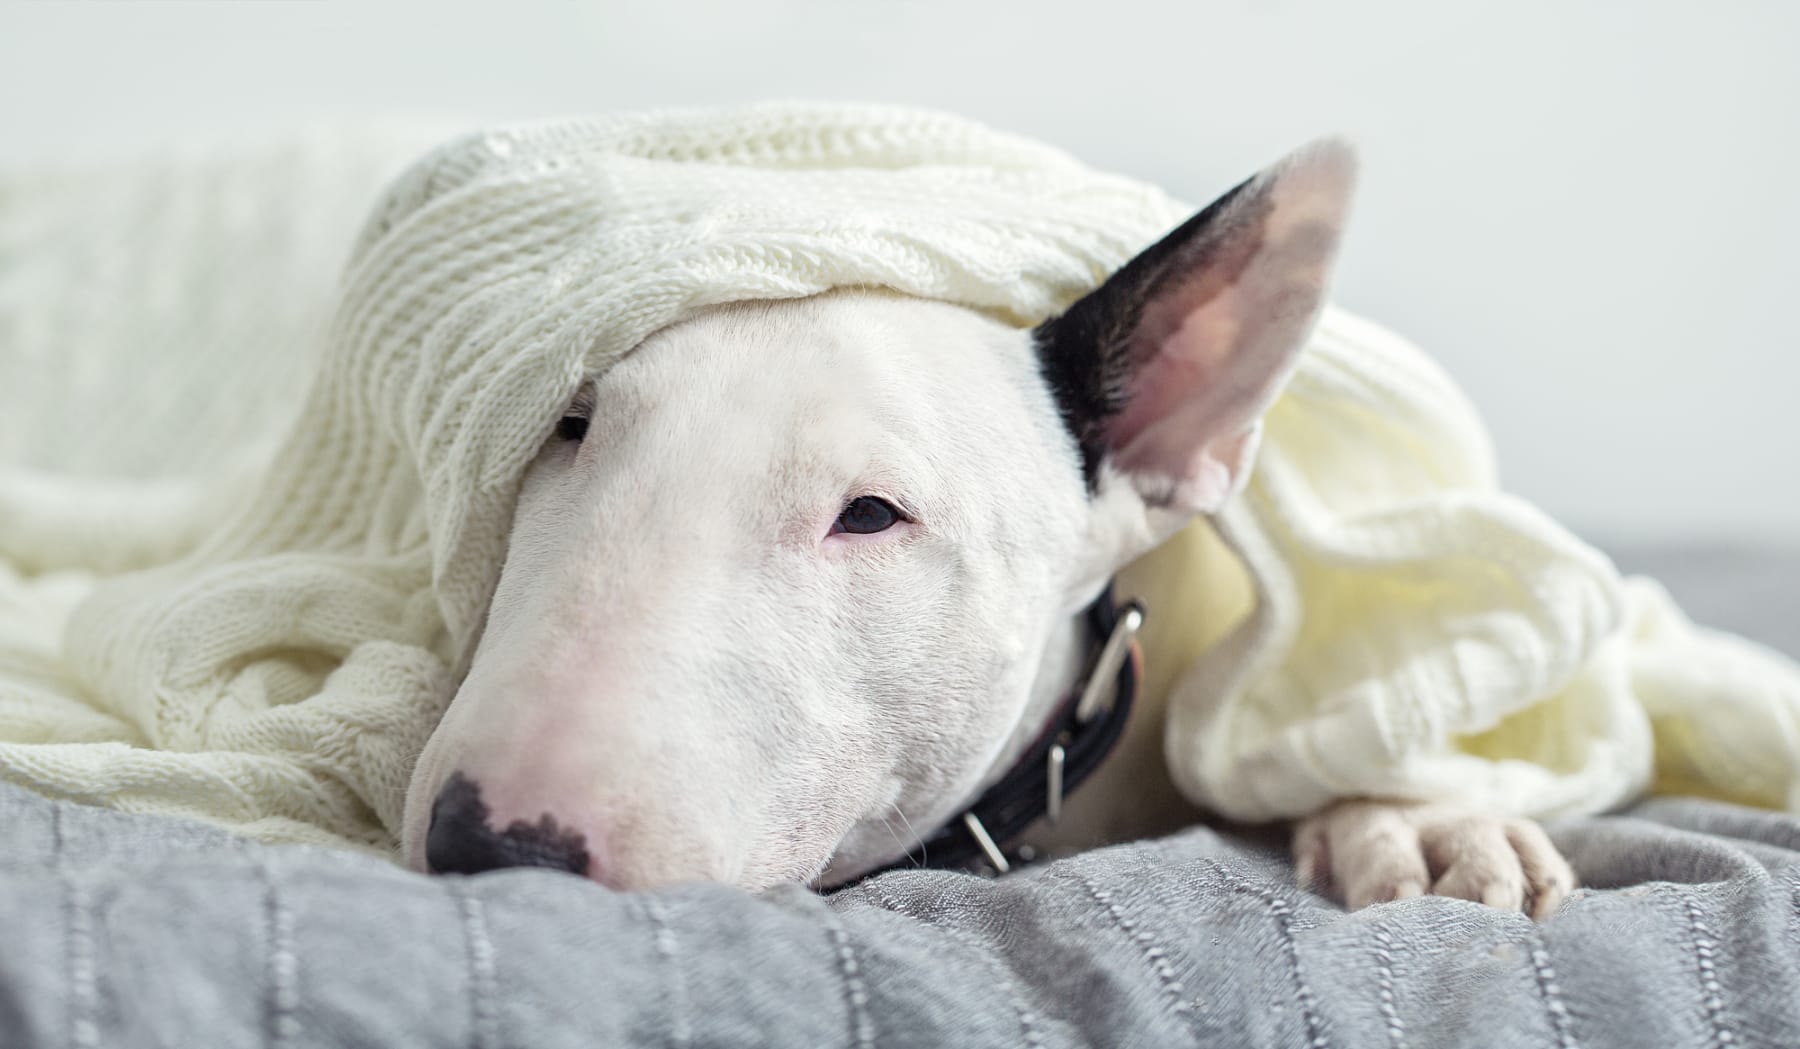 English bull terrier in blankets